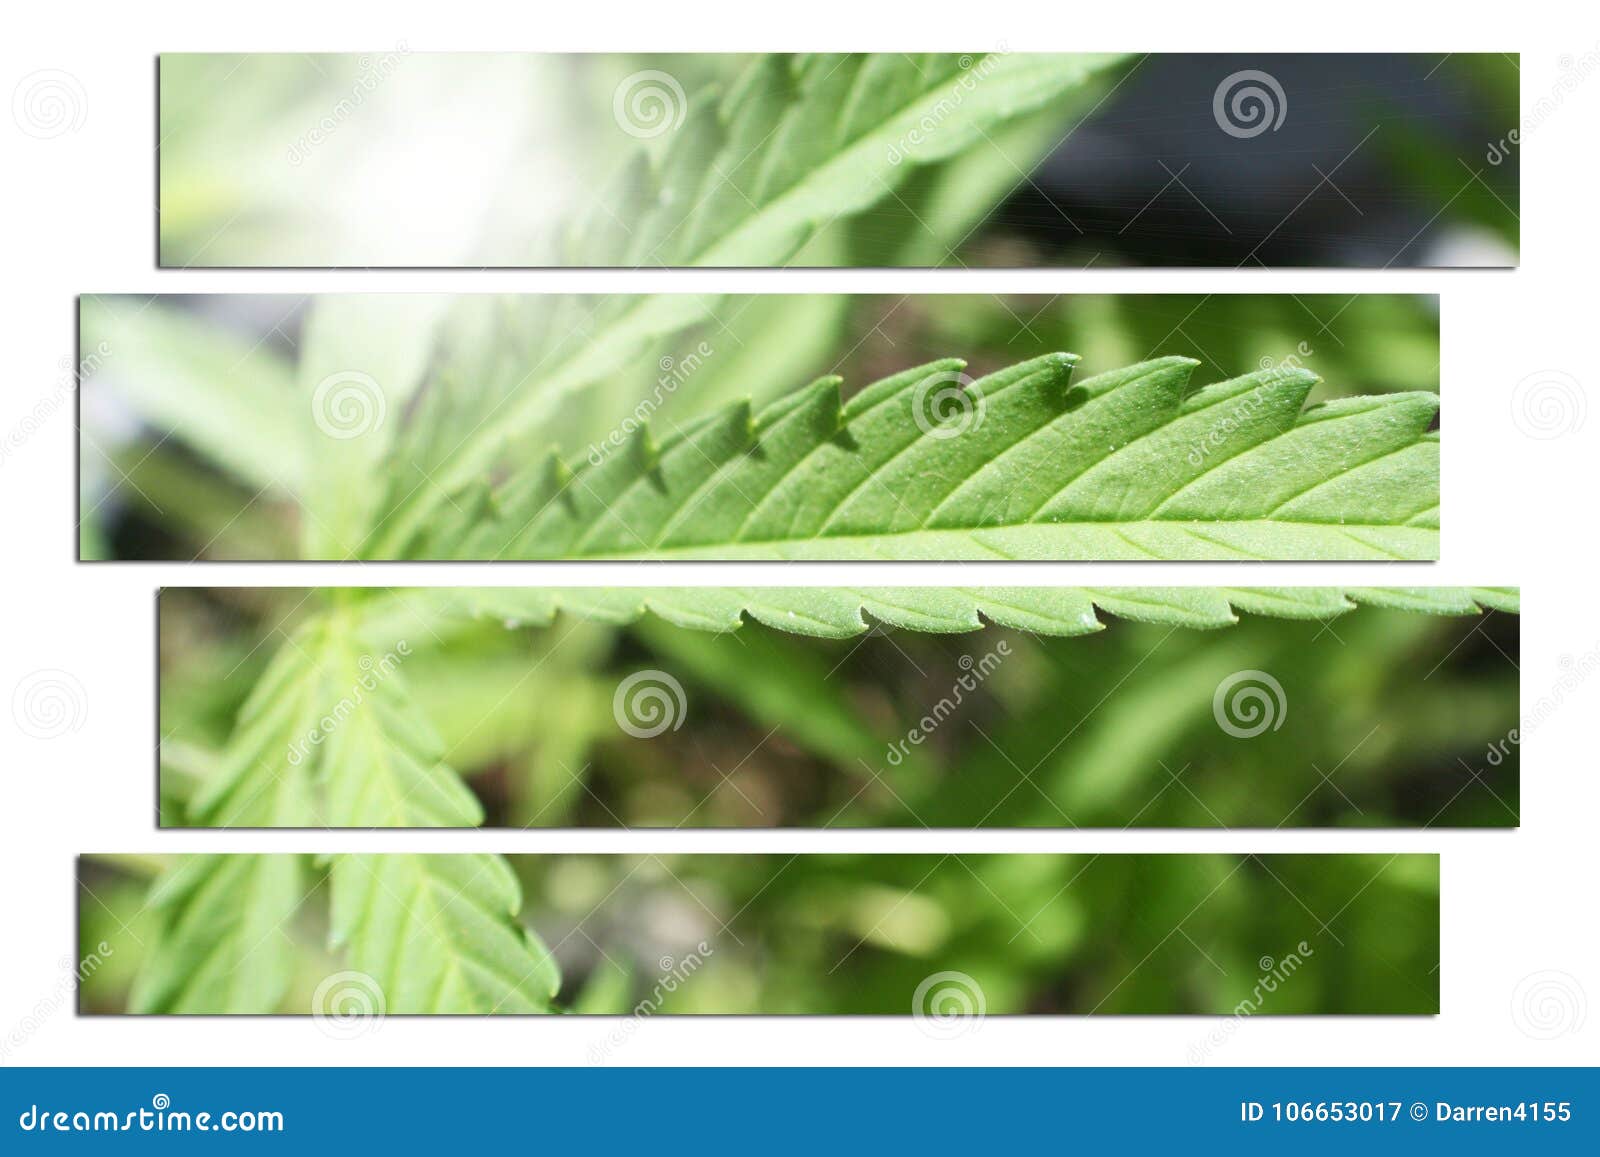 Marijuana Leaf Art High Quality Stock Image - Image of cash, joint ...